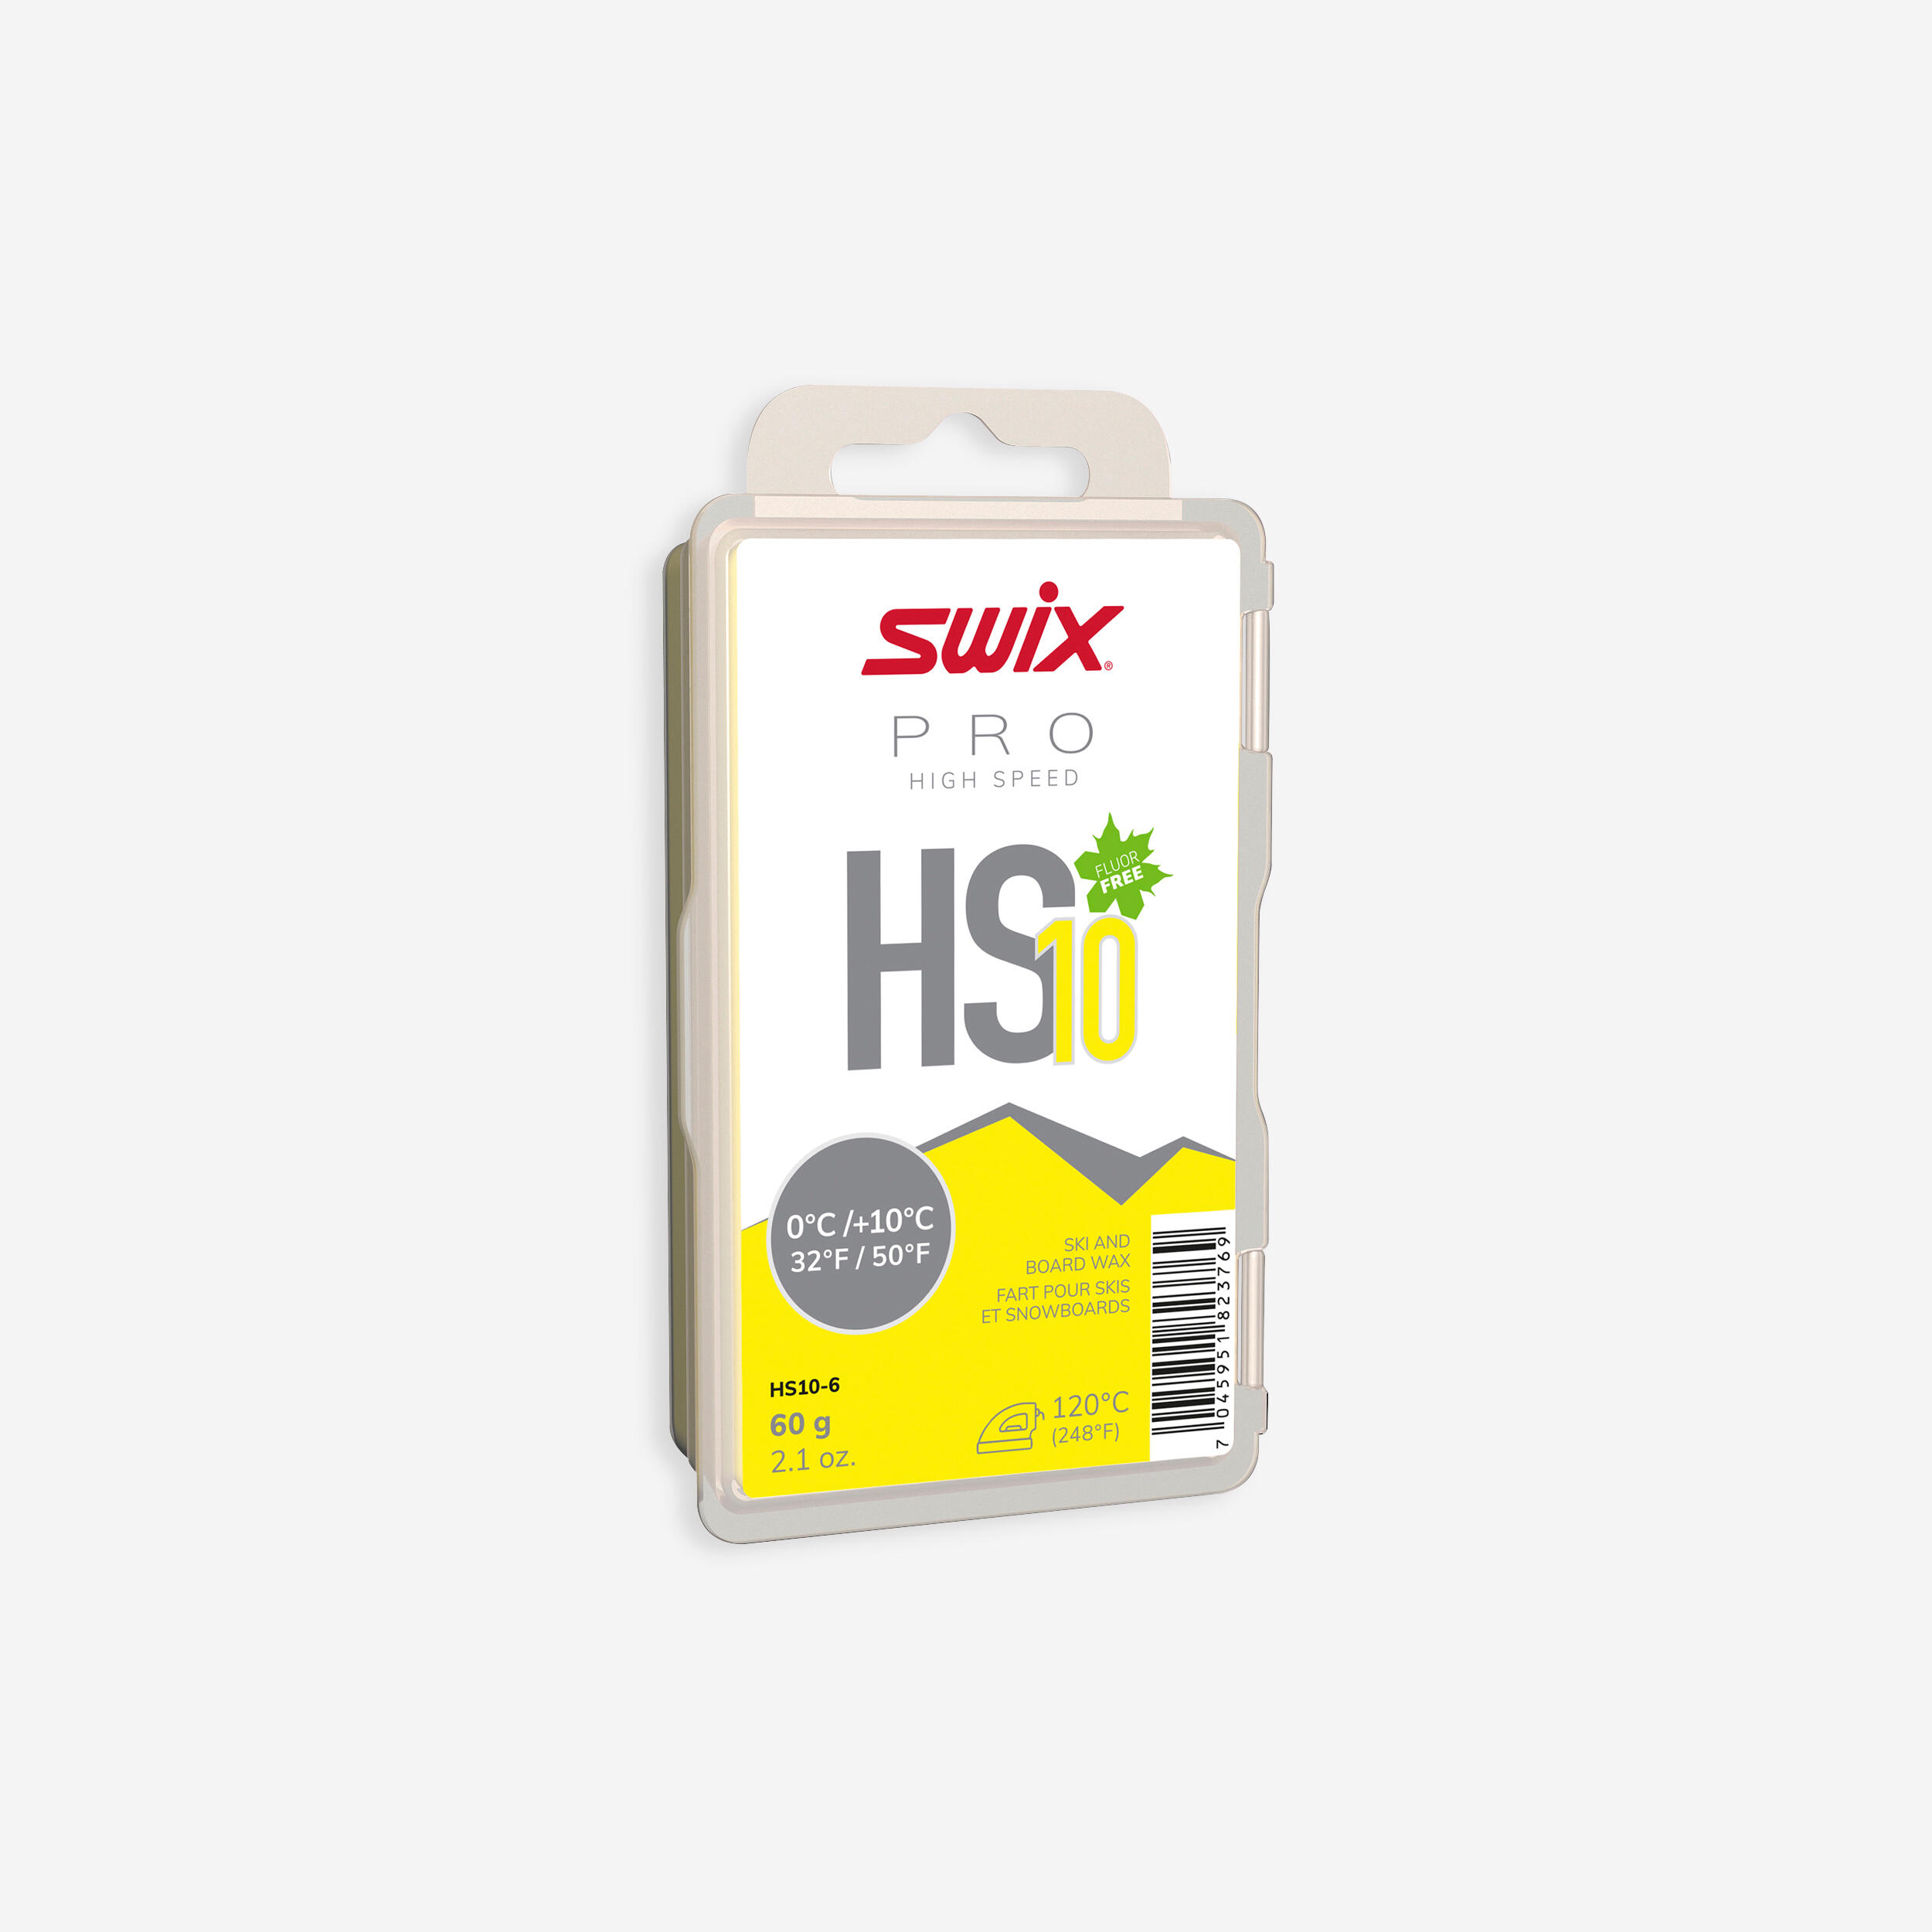 SWIX Warm wax - HS10 0°C/+10°C - 60g - Yellow